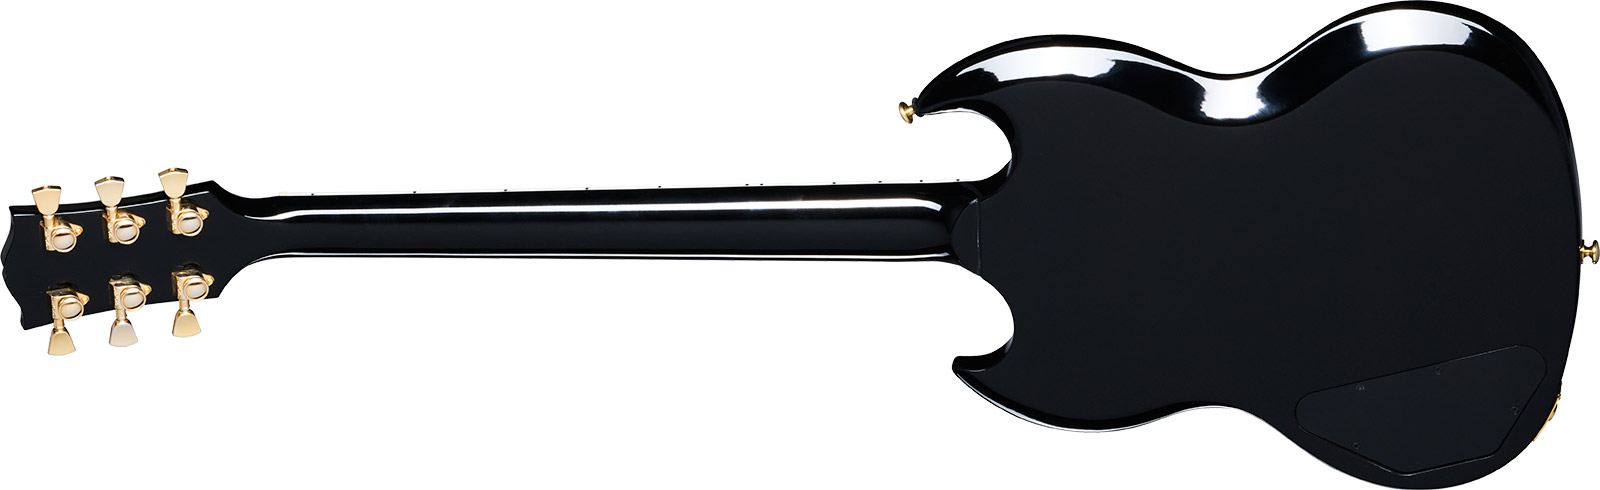 Gibson Sg Supreme Usa 2h Ht Rw - Fireburst - Guitarra eléctrica de doble corte. - Variation 1